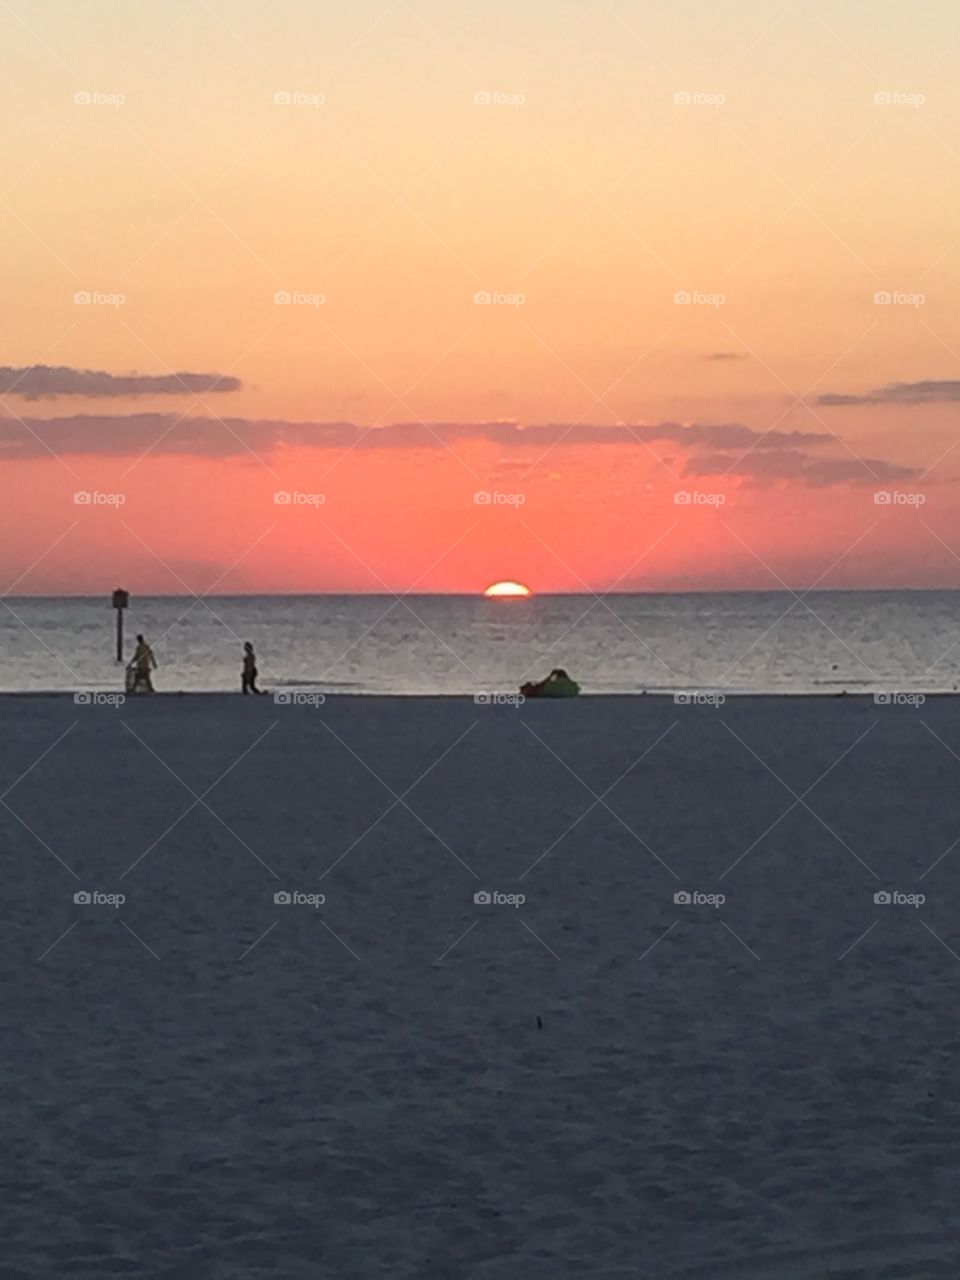 Sunset Clearwater Beach, Florida
